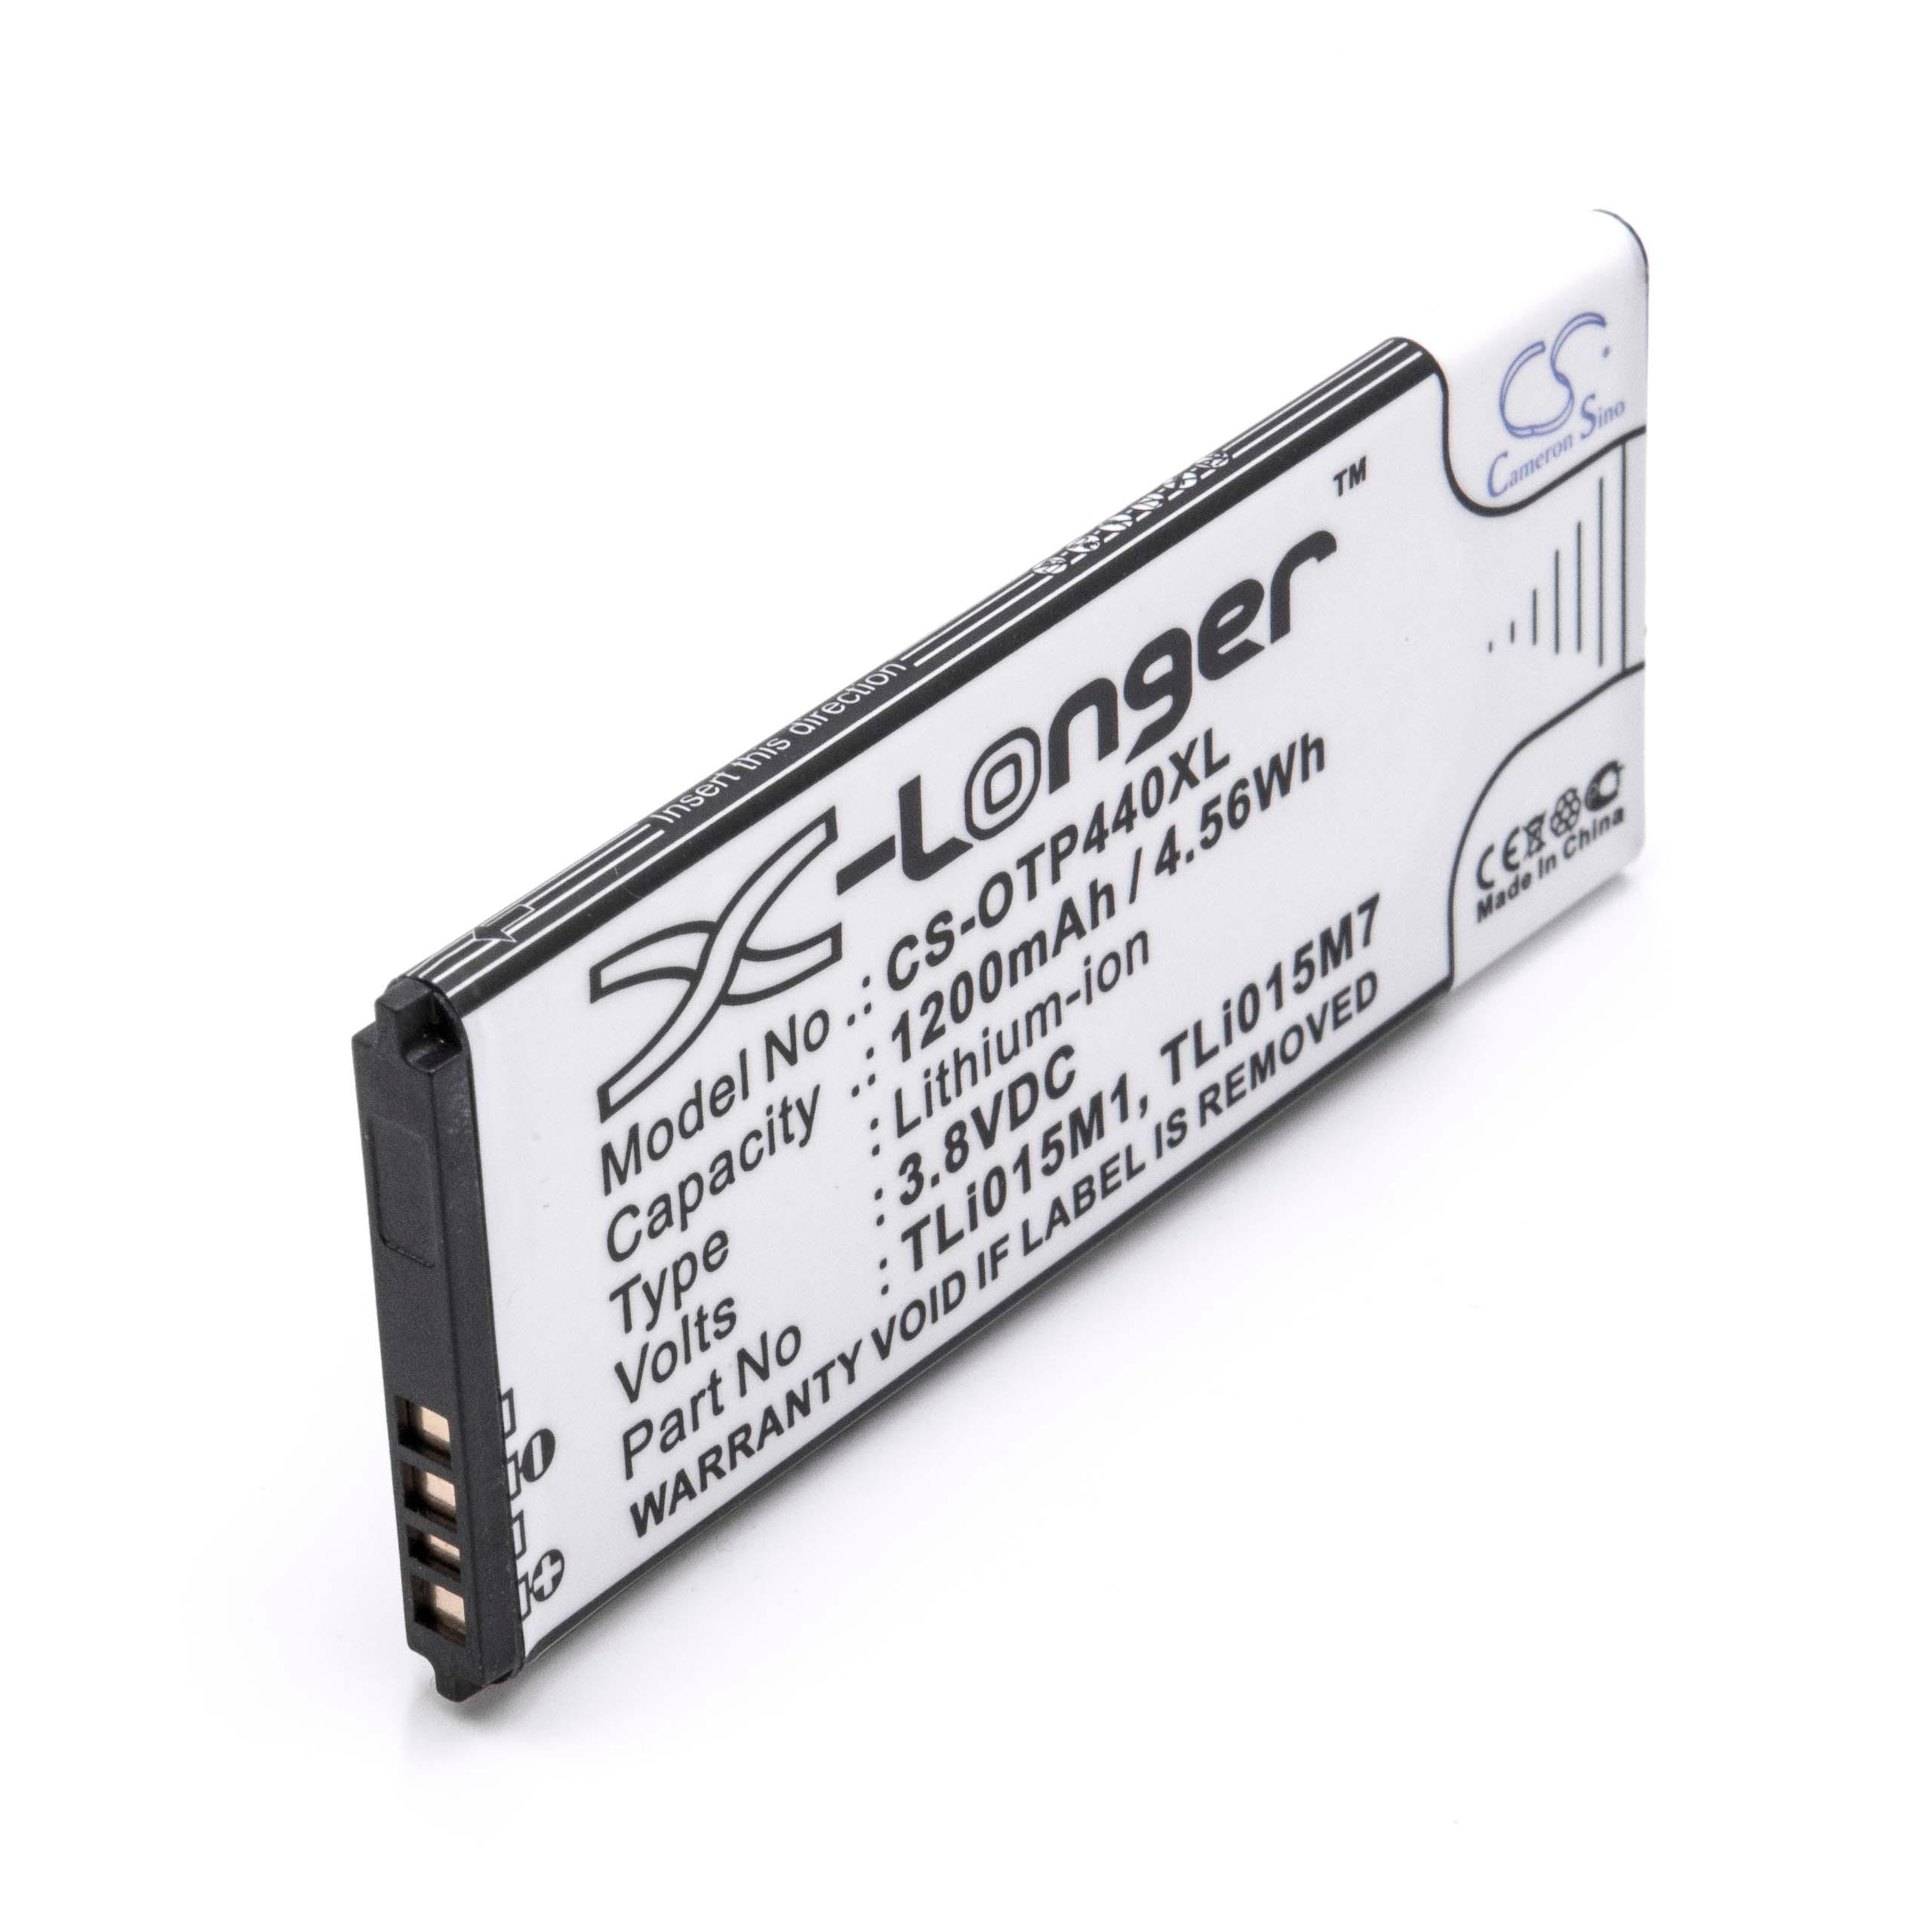 Batteria sostituisce Alcatel TLi015M7, TLi015M1, TLi015MA per cellulare Alcatel - 1200mAh 3,8V Li-Ion